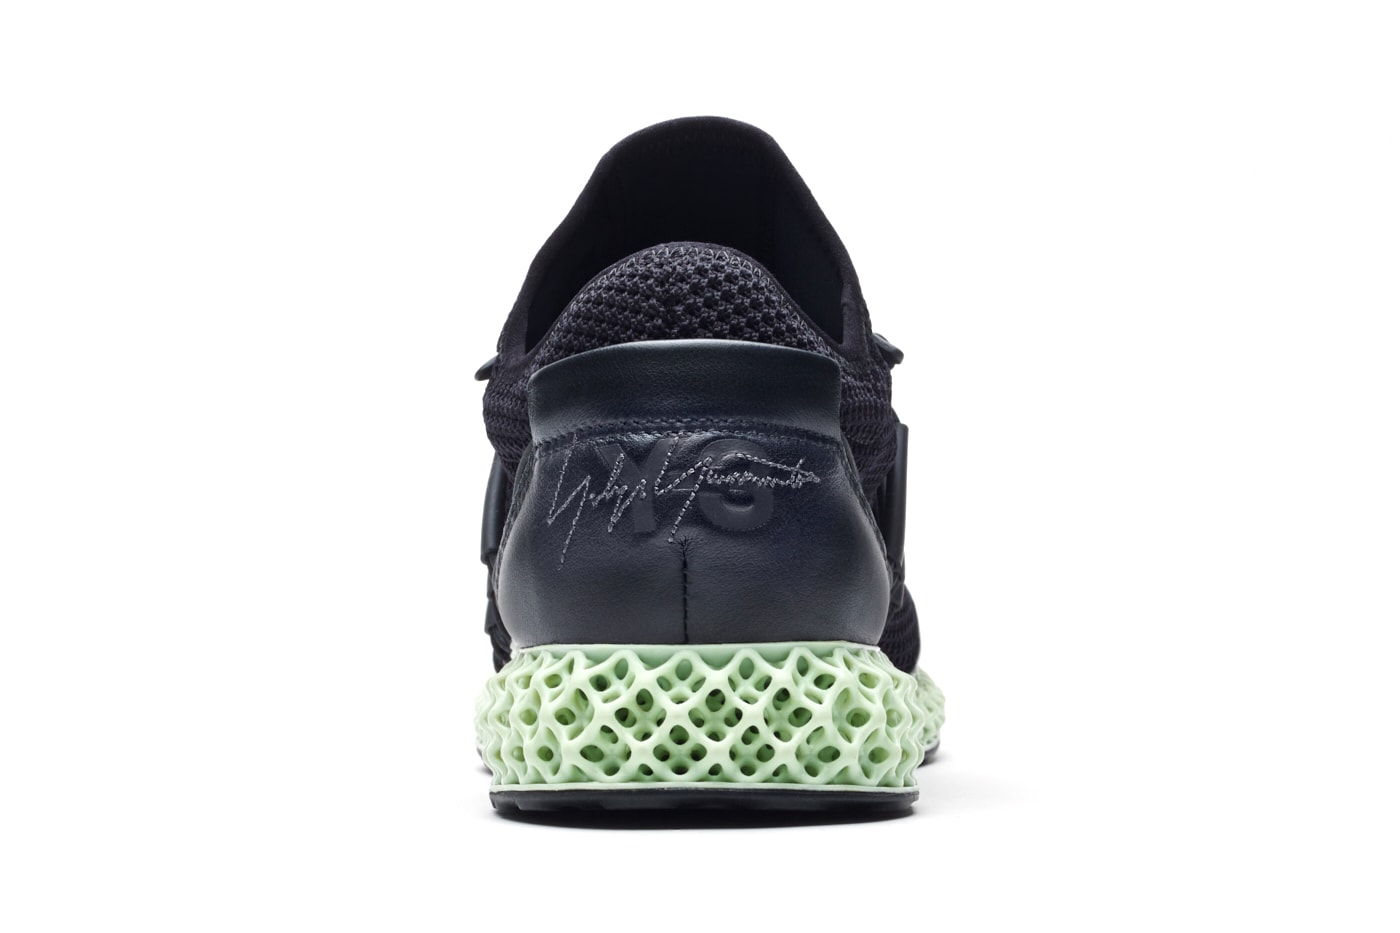 Y-3 RUNNER 4D adidas Futurecraft Yohji Yamamoto Sneaker Footwear Release Information Trainer Design Collaboration Black Green